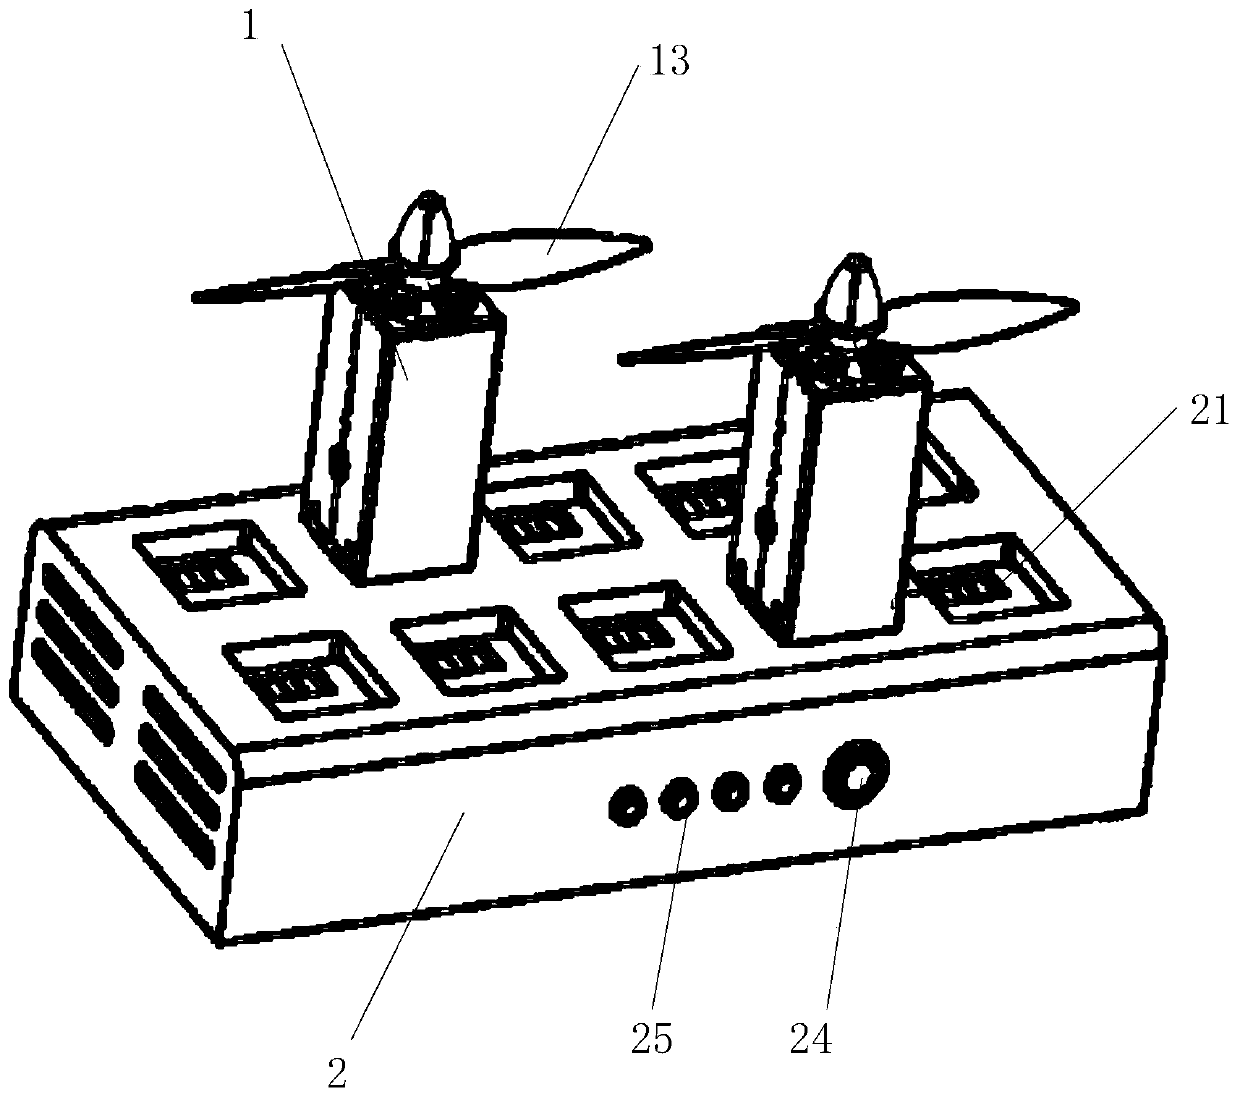 Miniature flight module for integrated power module teaching